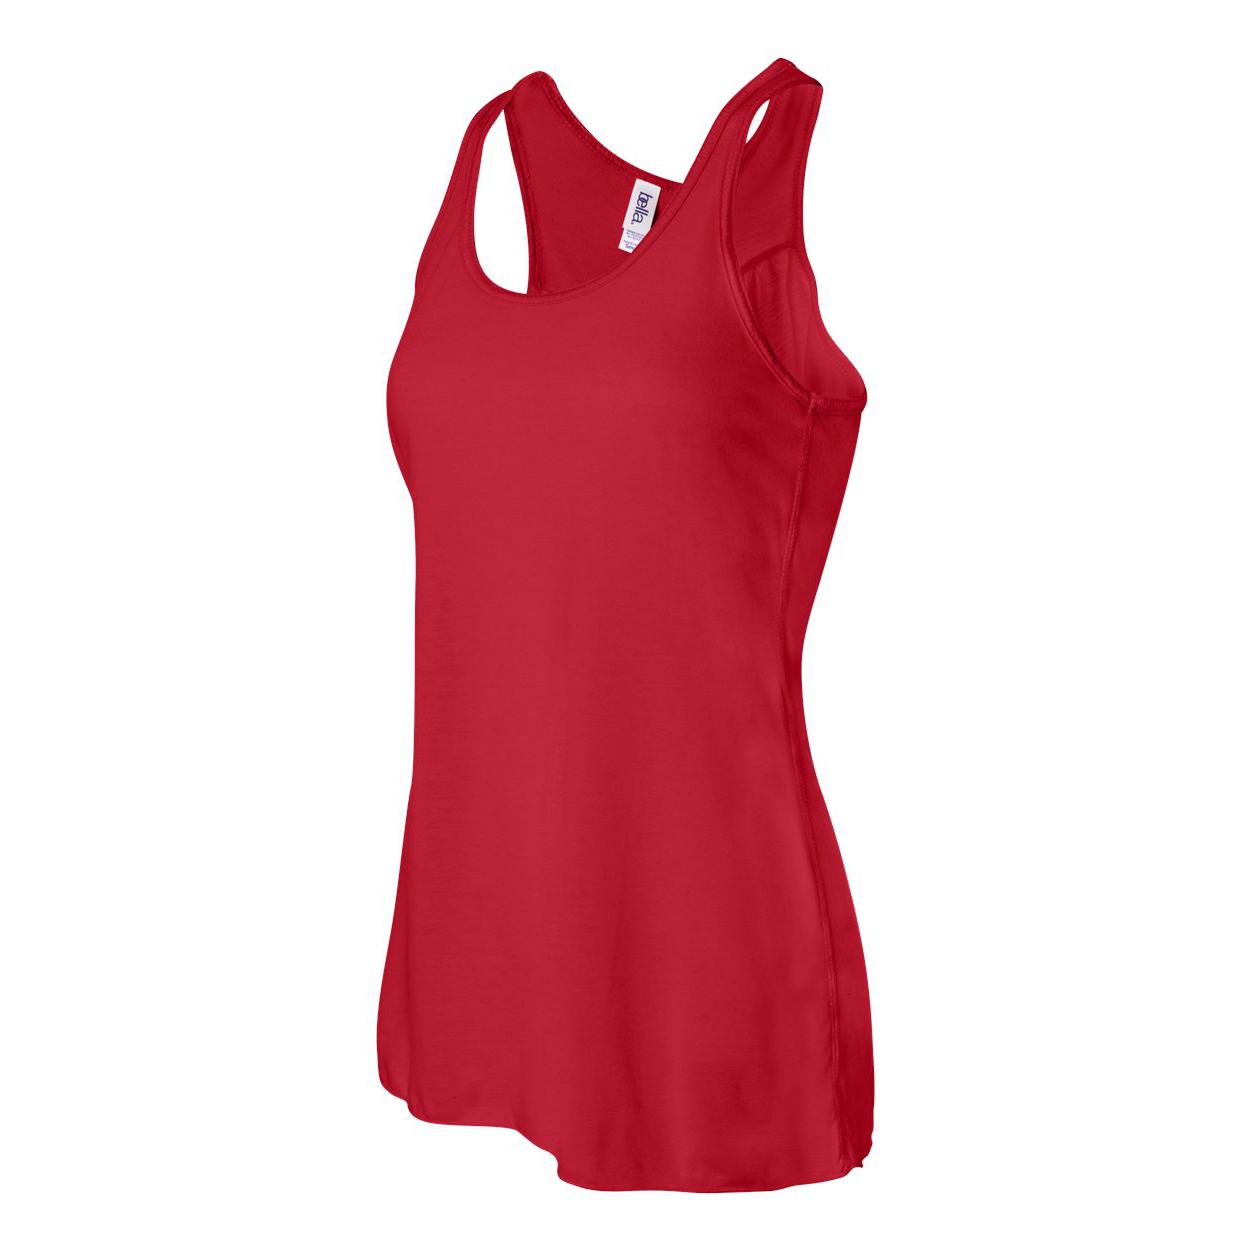 New Womens Ladies Red Flowy Racerback Tank Top Tops Yoga Sleeveless S M L XL